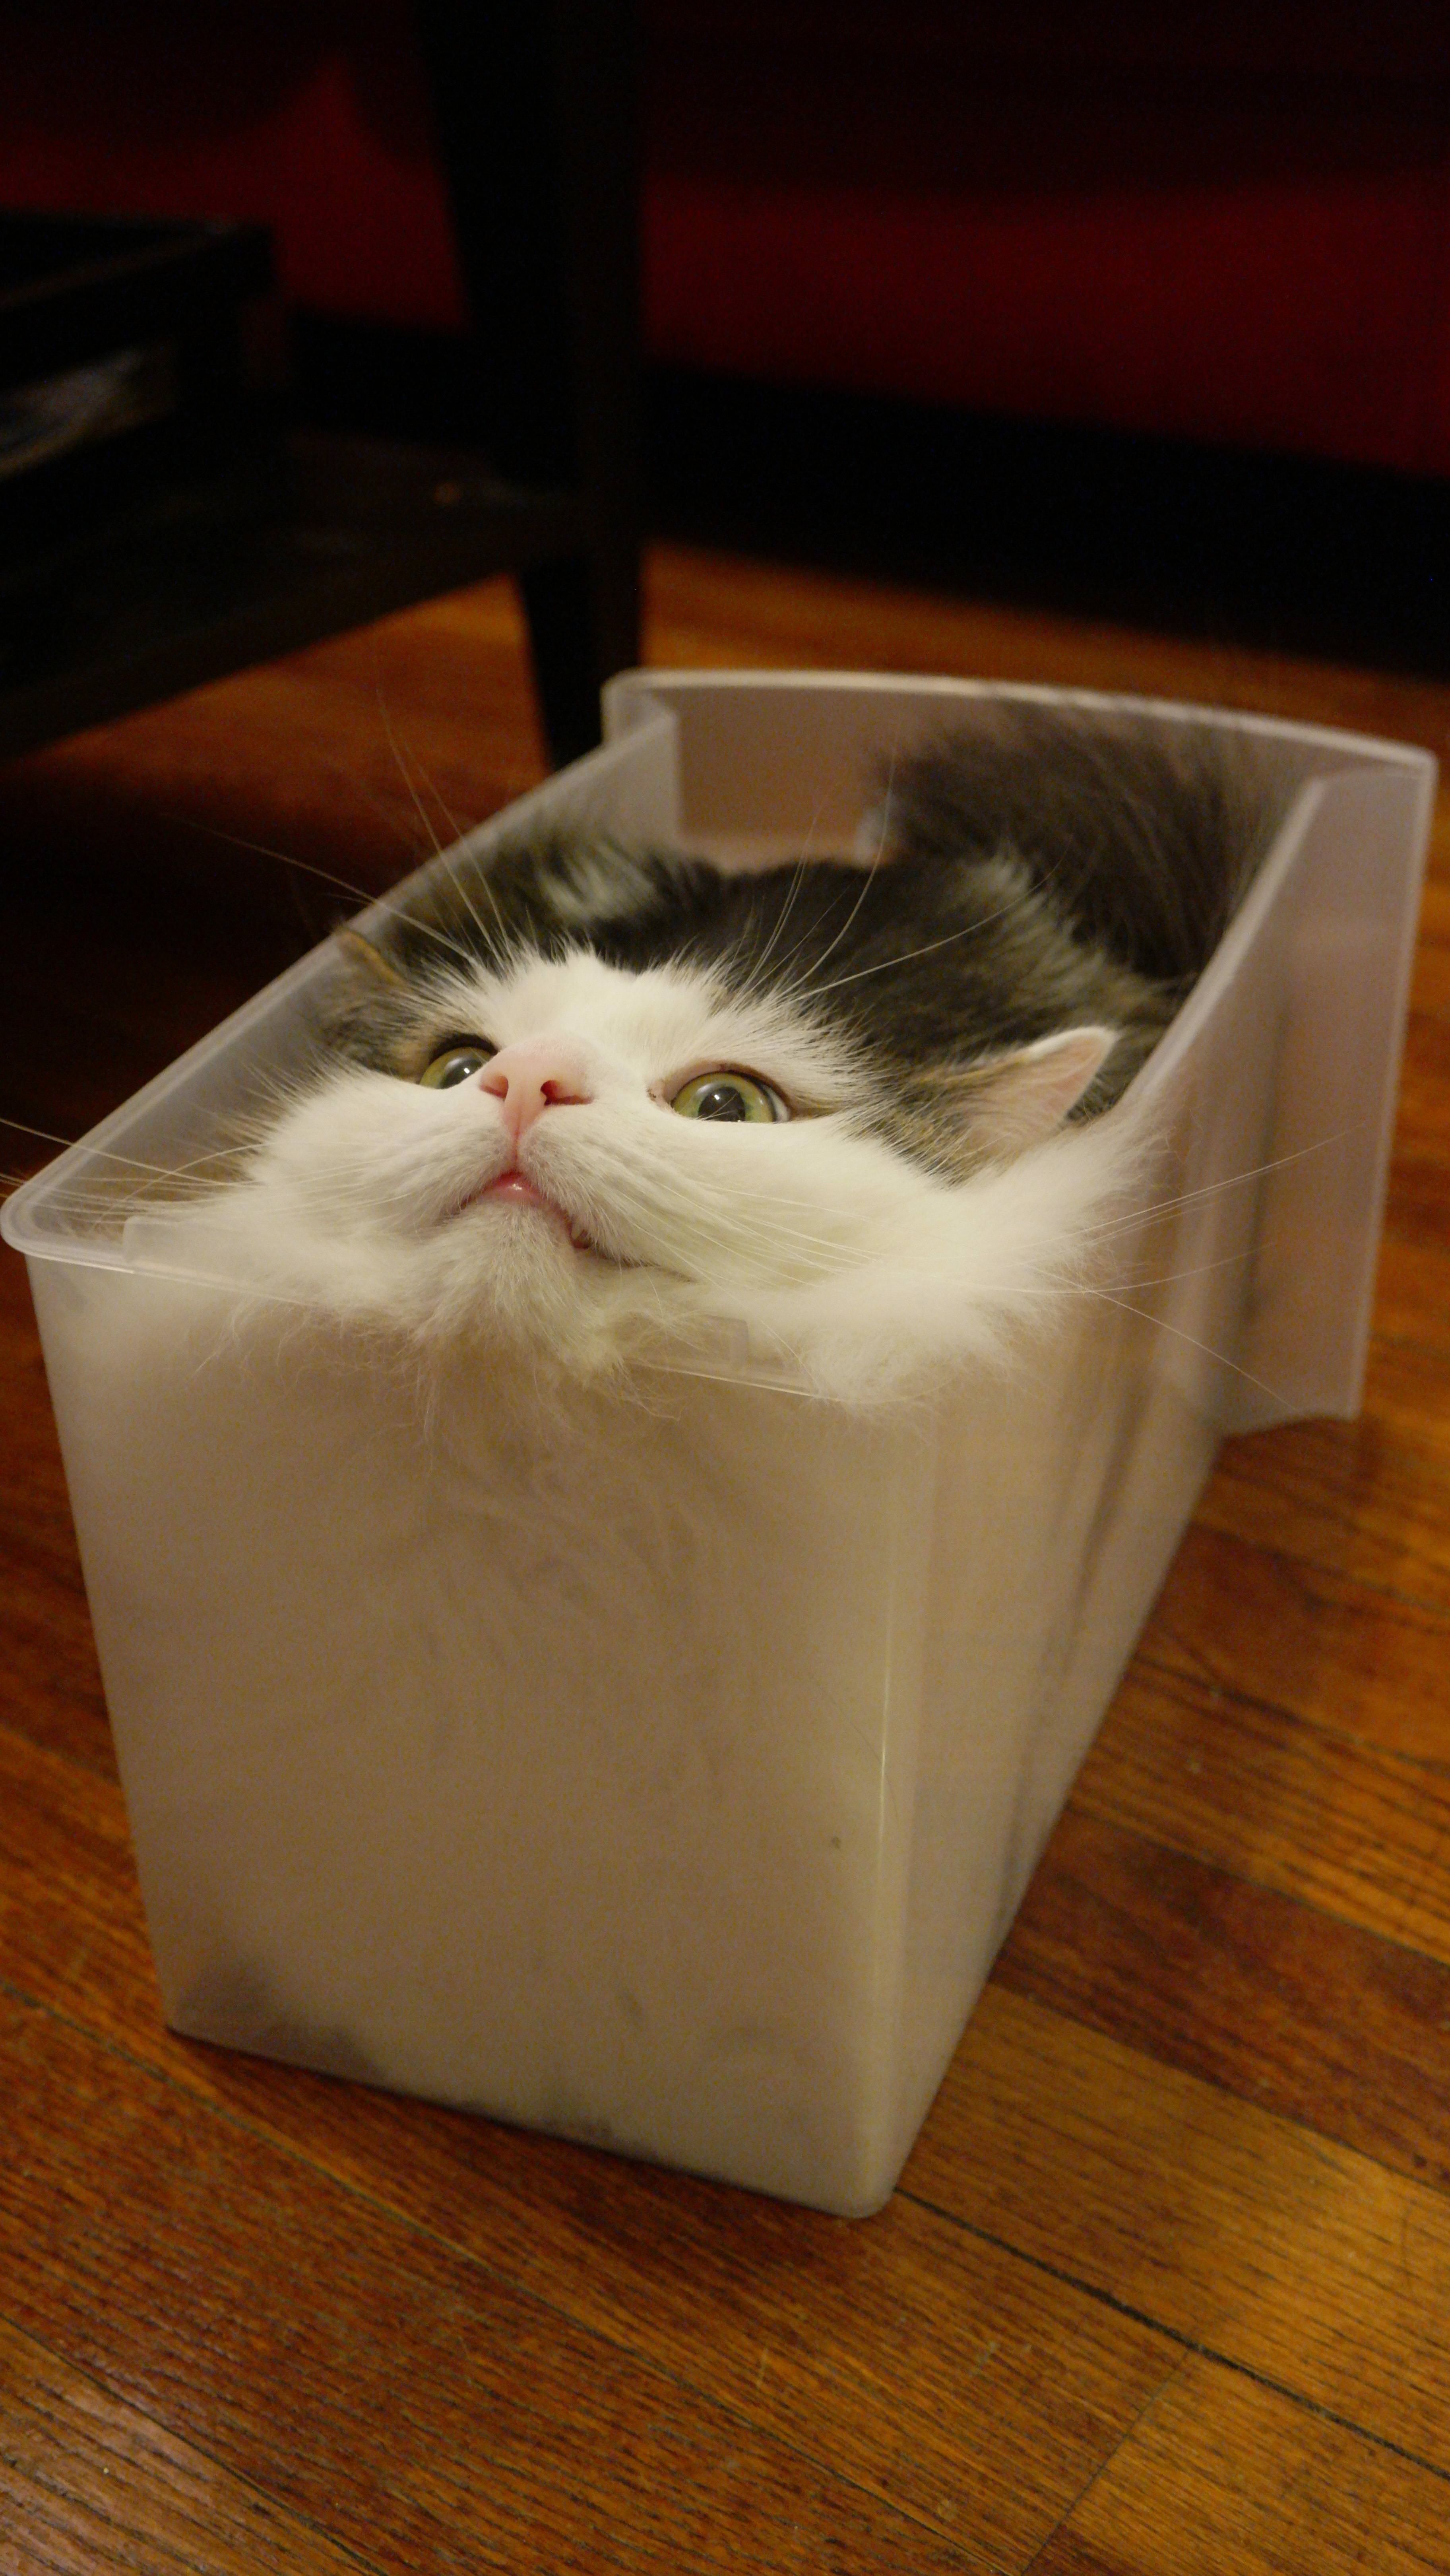 UPDATE: Feline continues to seek fully liquid state